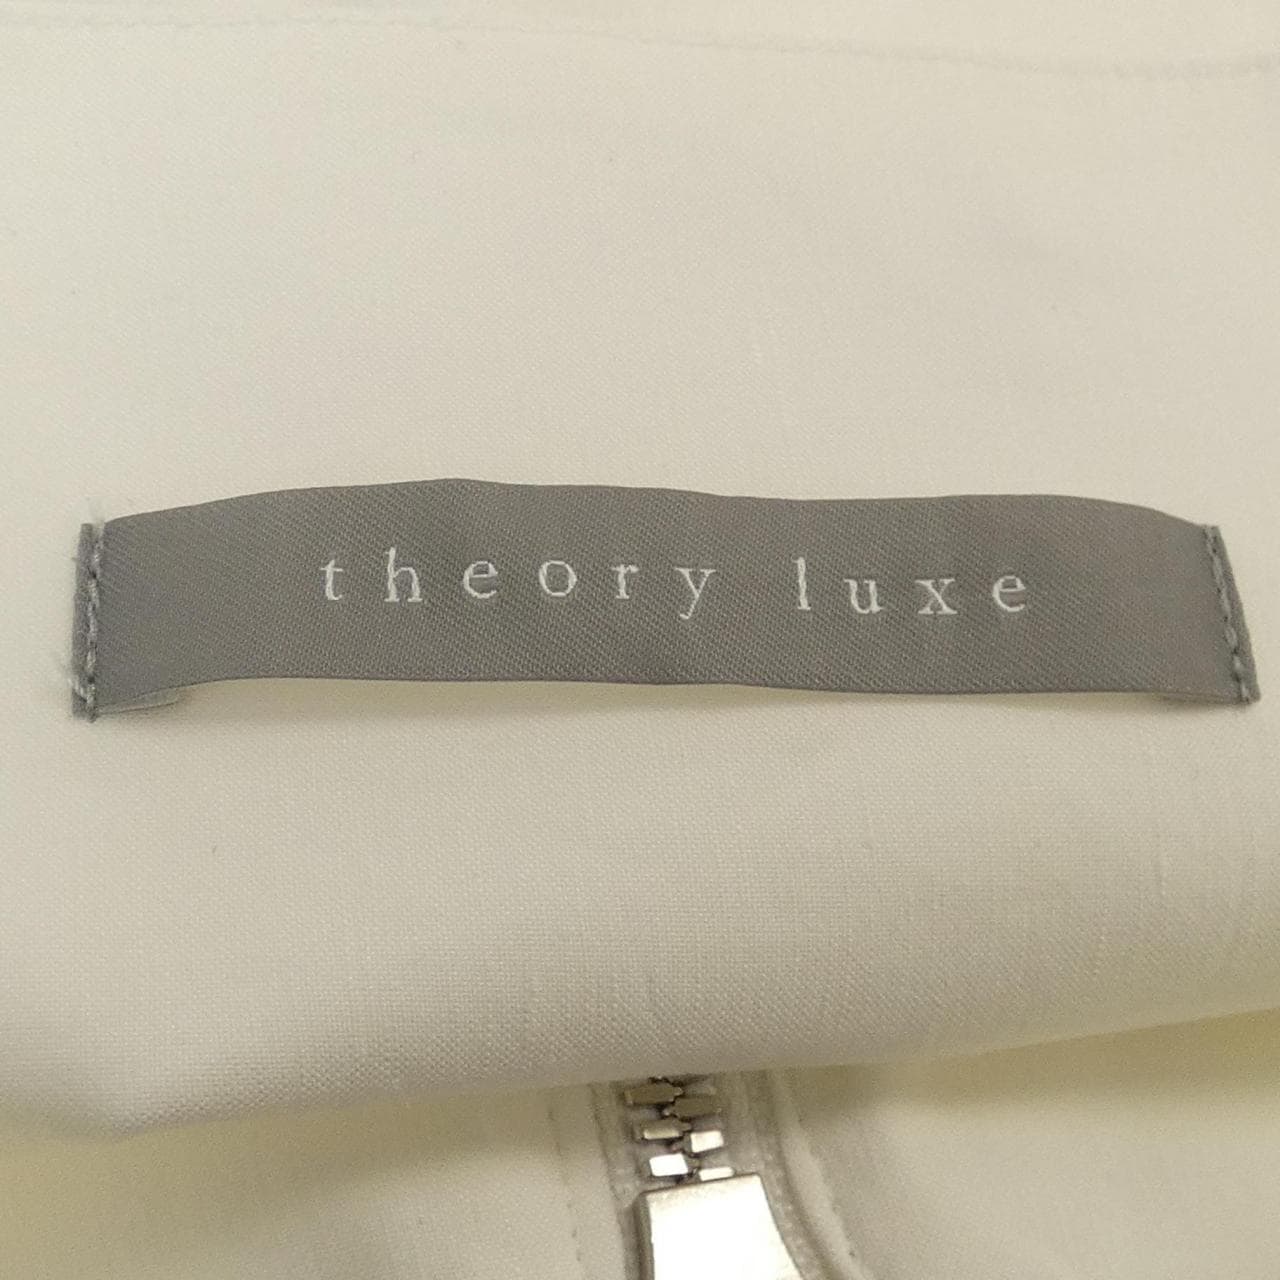 塞奧莉露Theory luxe夾克